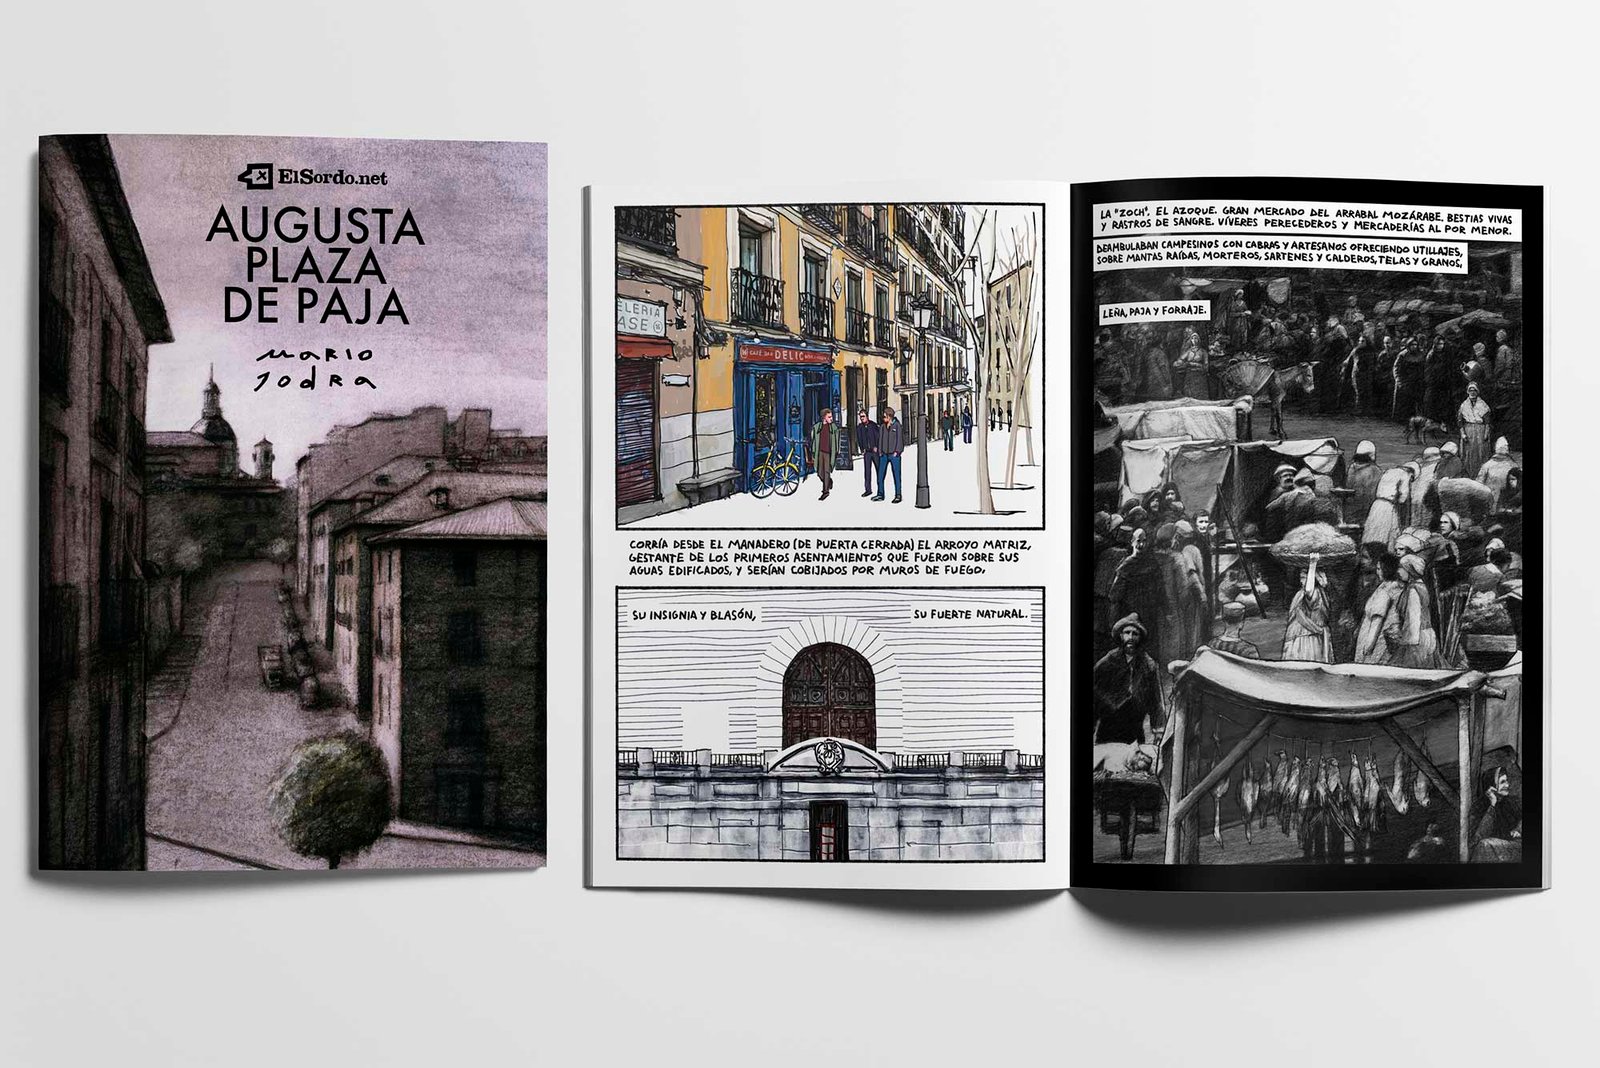 Mario Jodra Artist's Book Cover design "Augusta Plaza de Paja" pages illustration